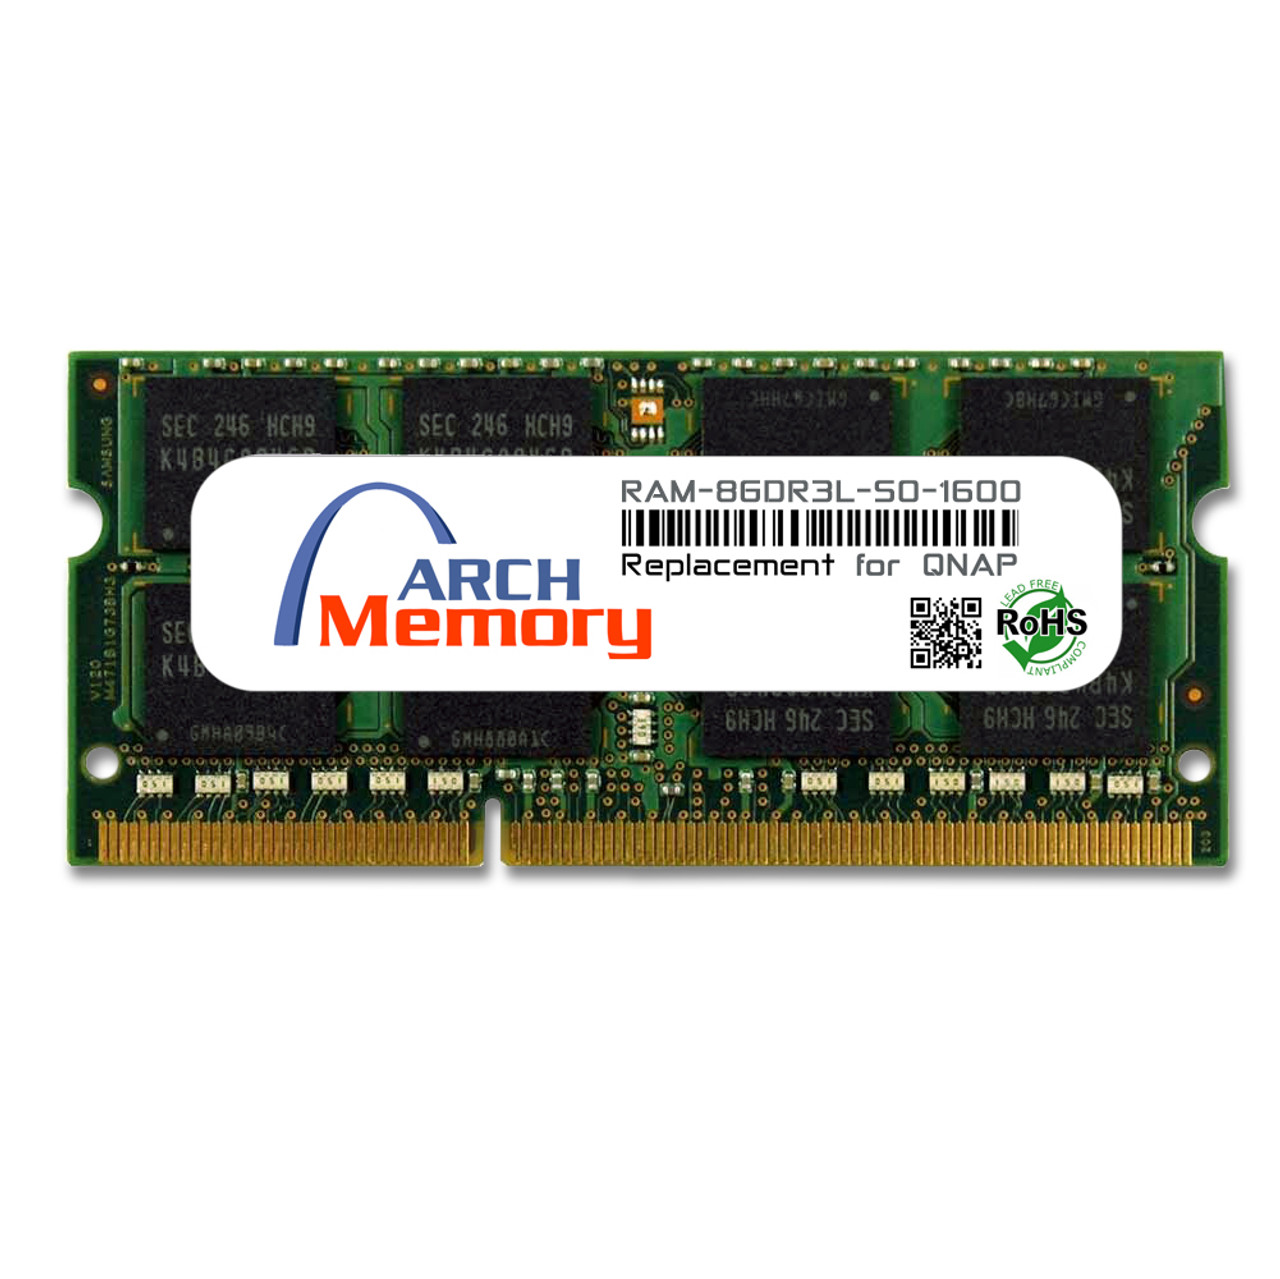 8GB RAM-8GDR3L-SO-1600 DDR3L-1600 PC3-12800 204-Pin SODIMM RAM | Memory for QNAP